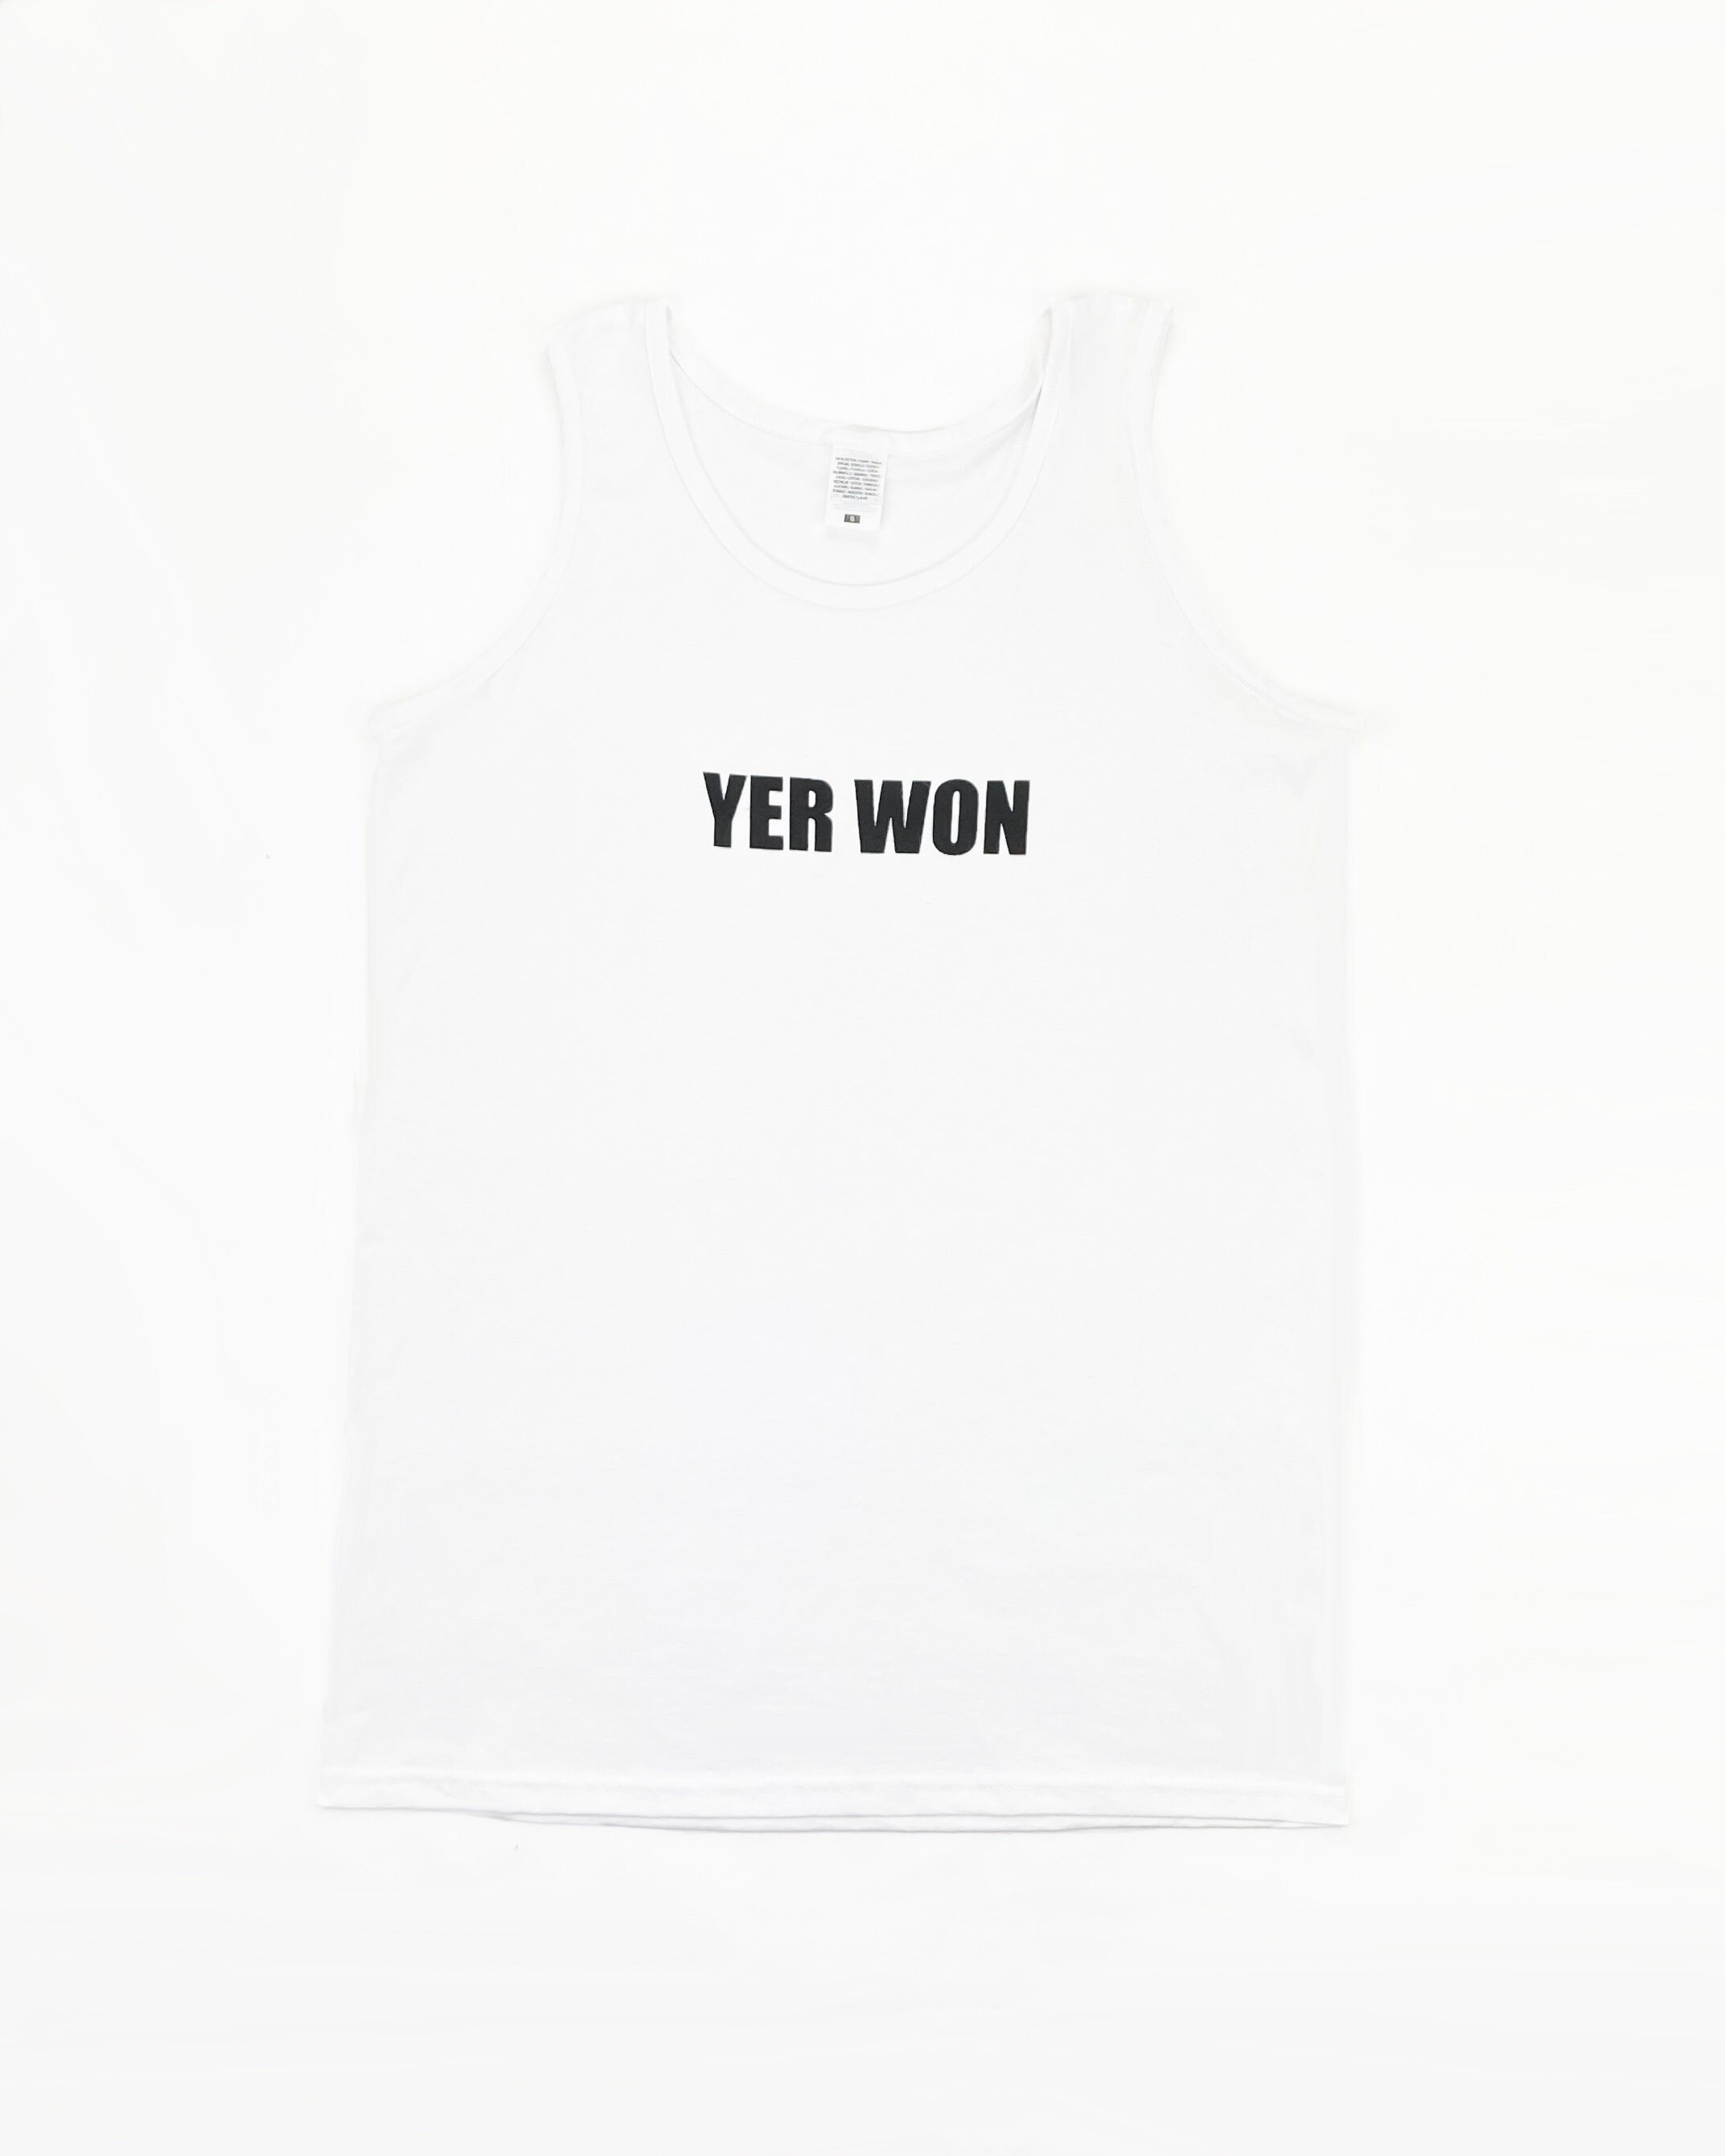 Personalised Women's Gym Vest Top Customised Slogan Gym Tops